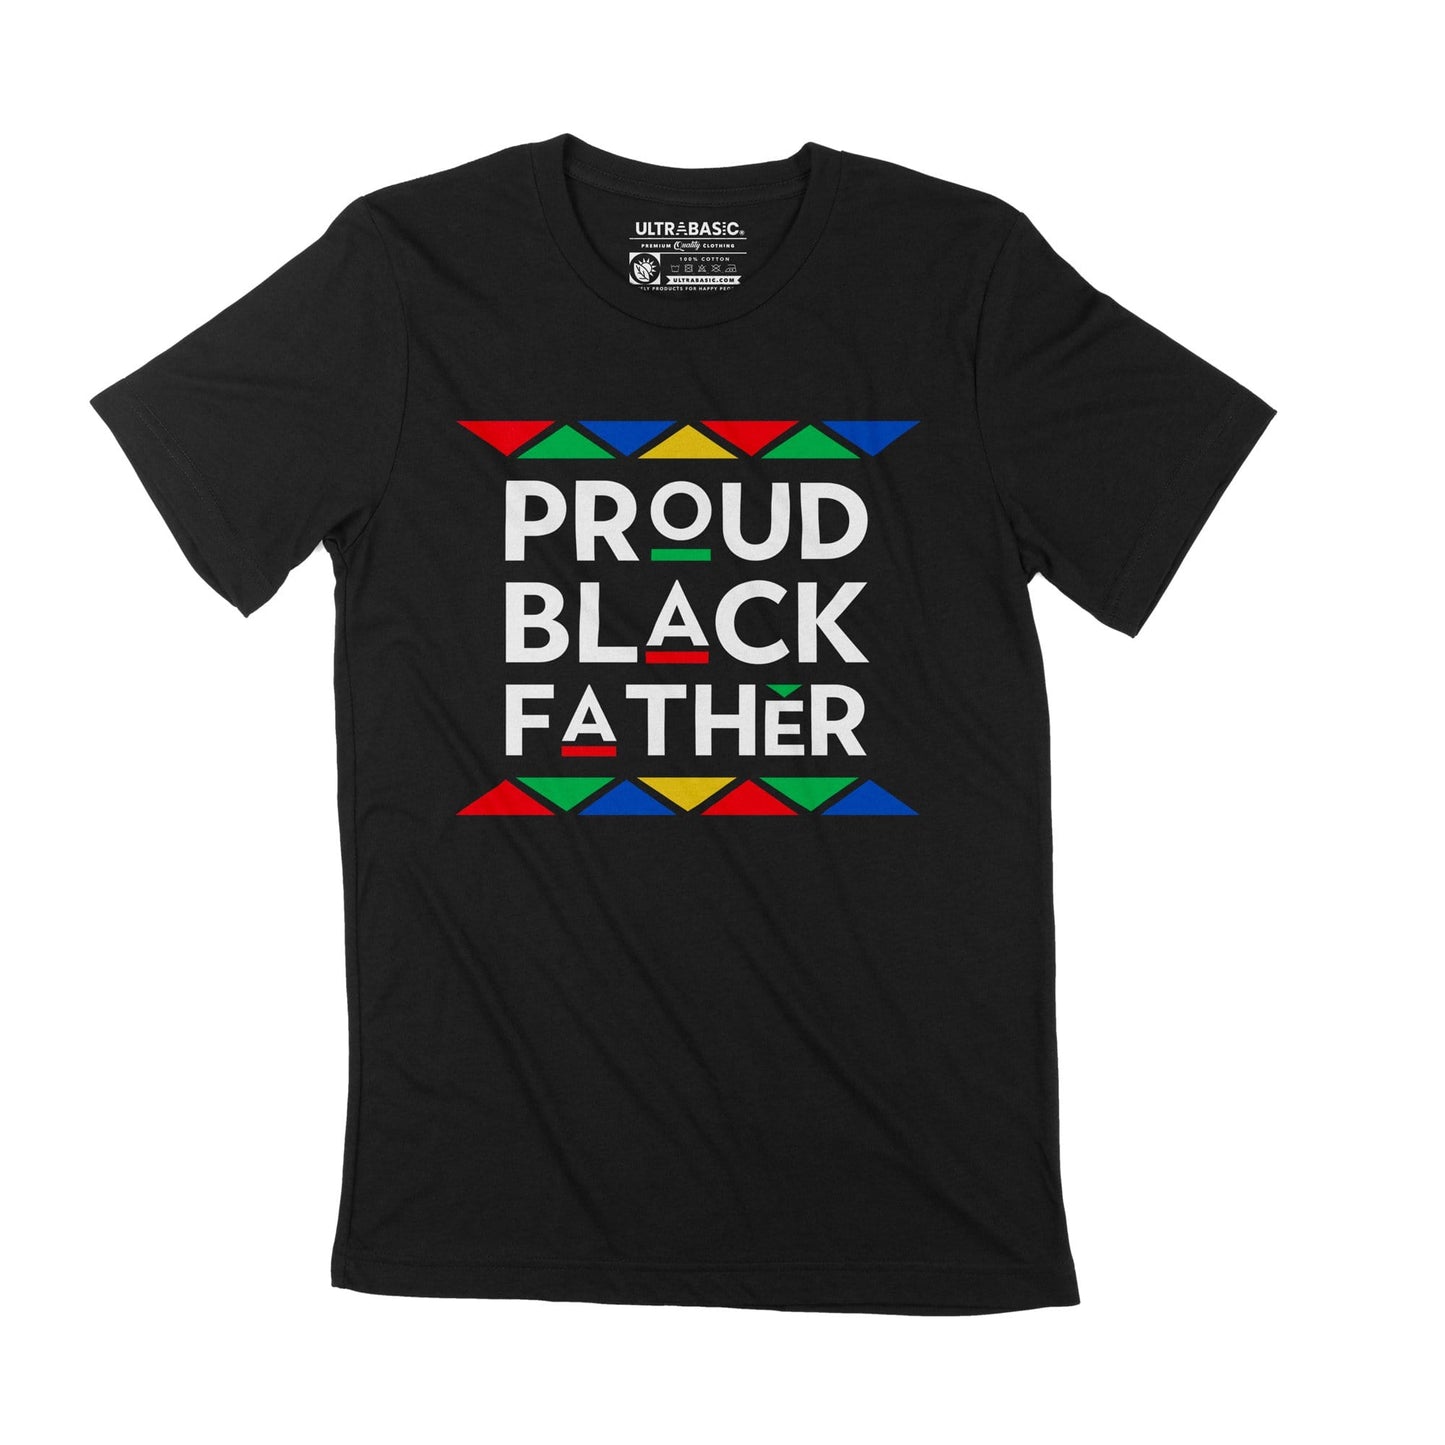 Unisex Adult T-Shirt Proud Black Father Black Leader BLM Shirt